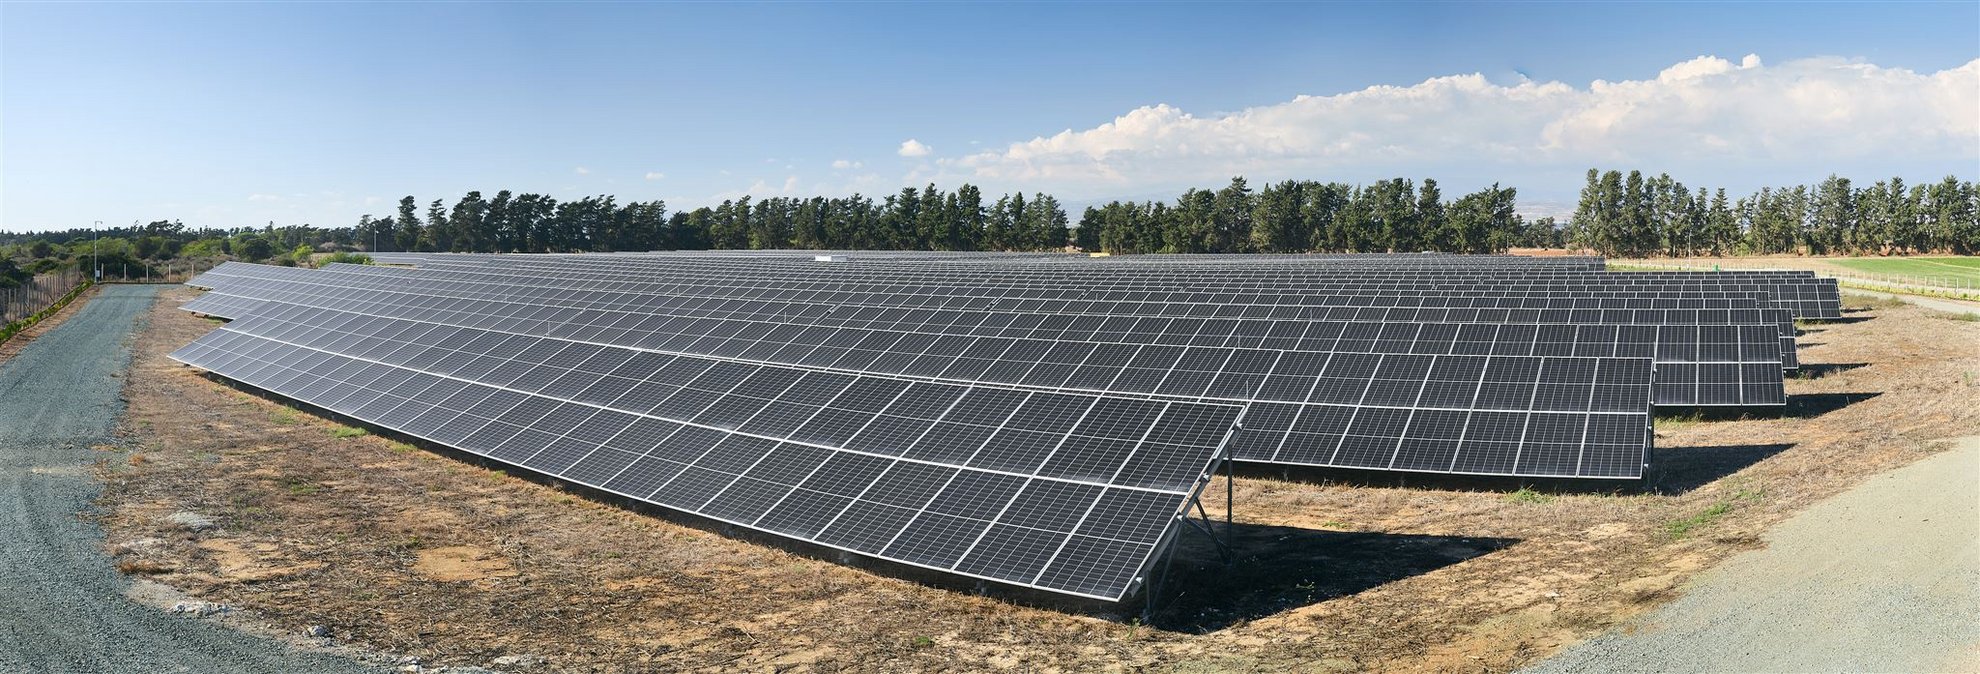 eac solar park akrotiri